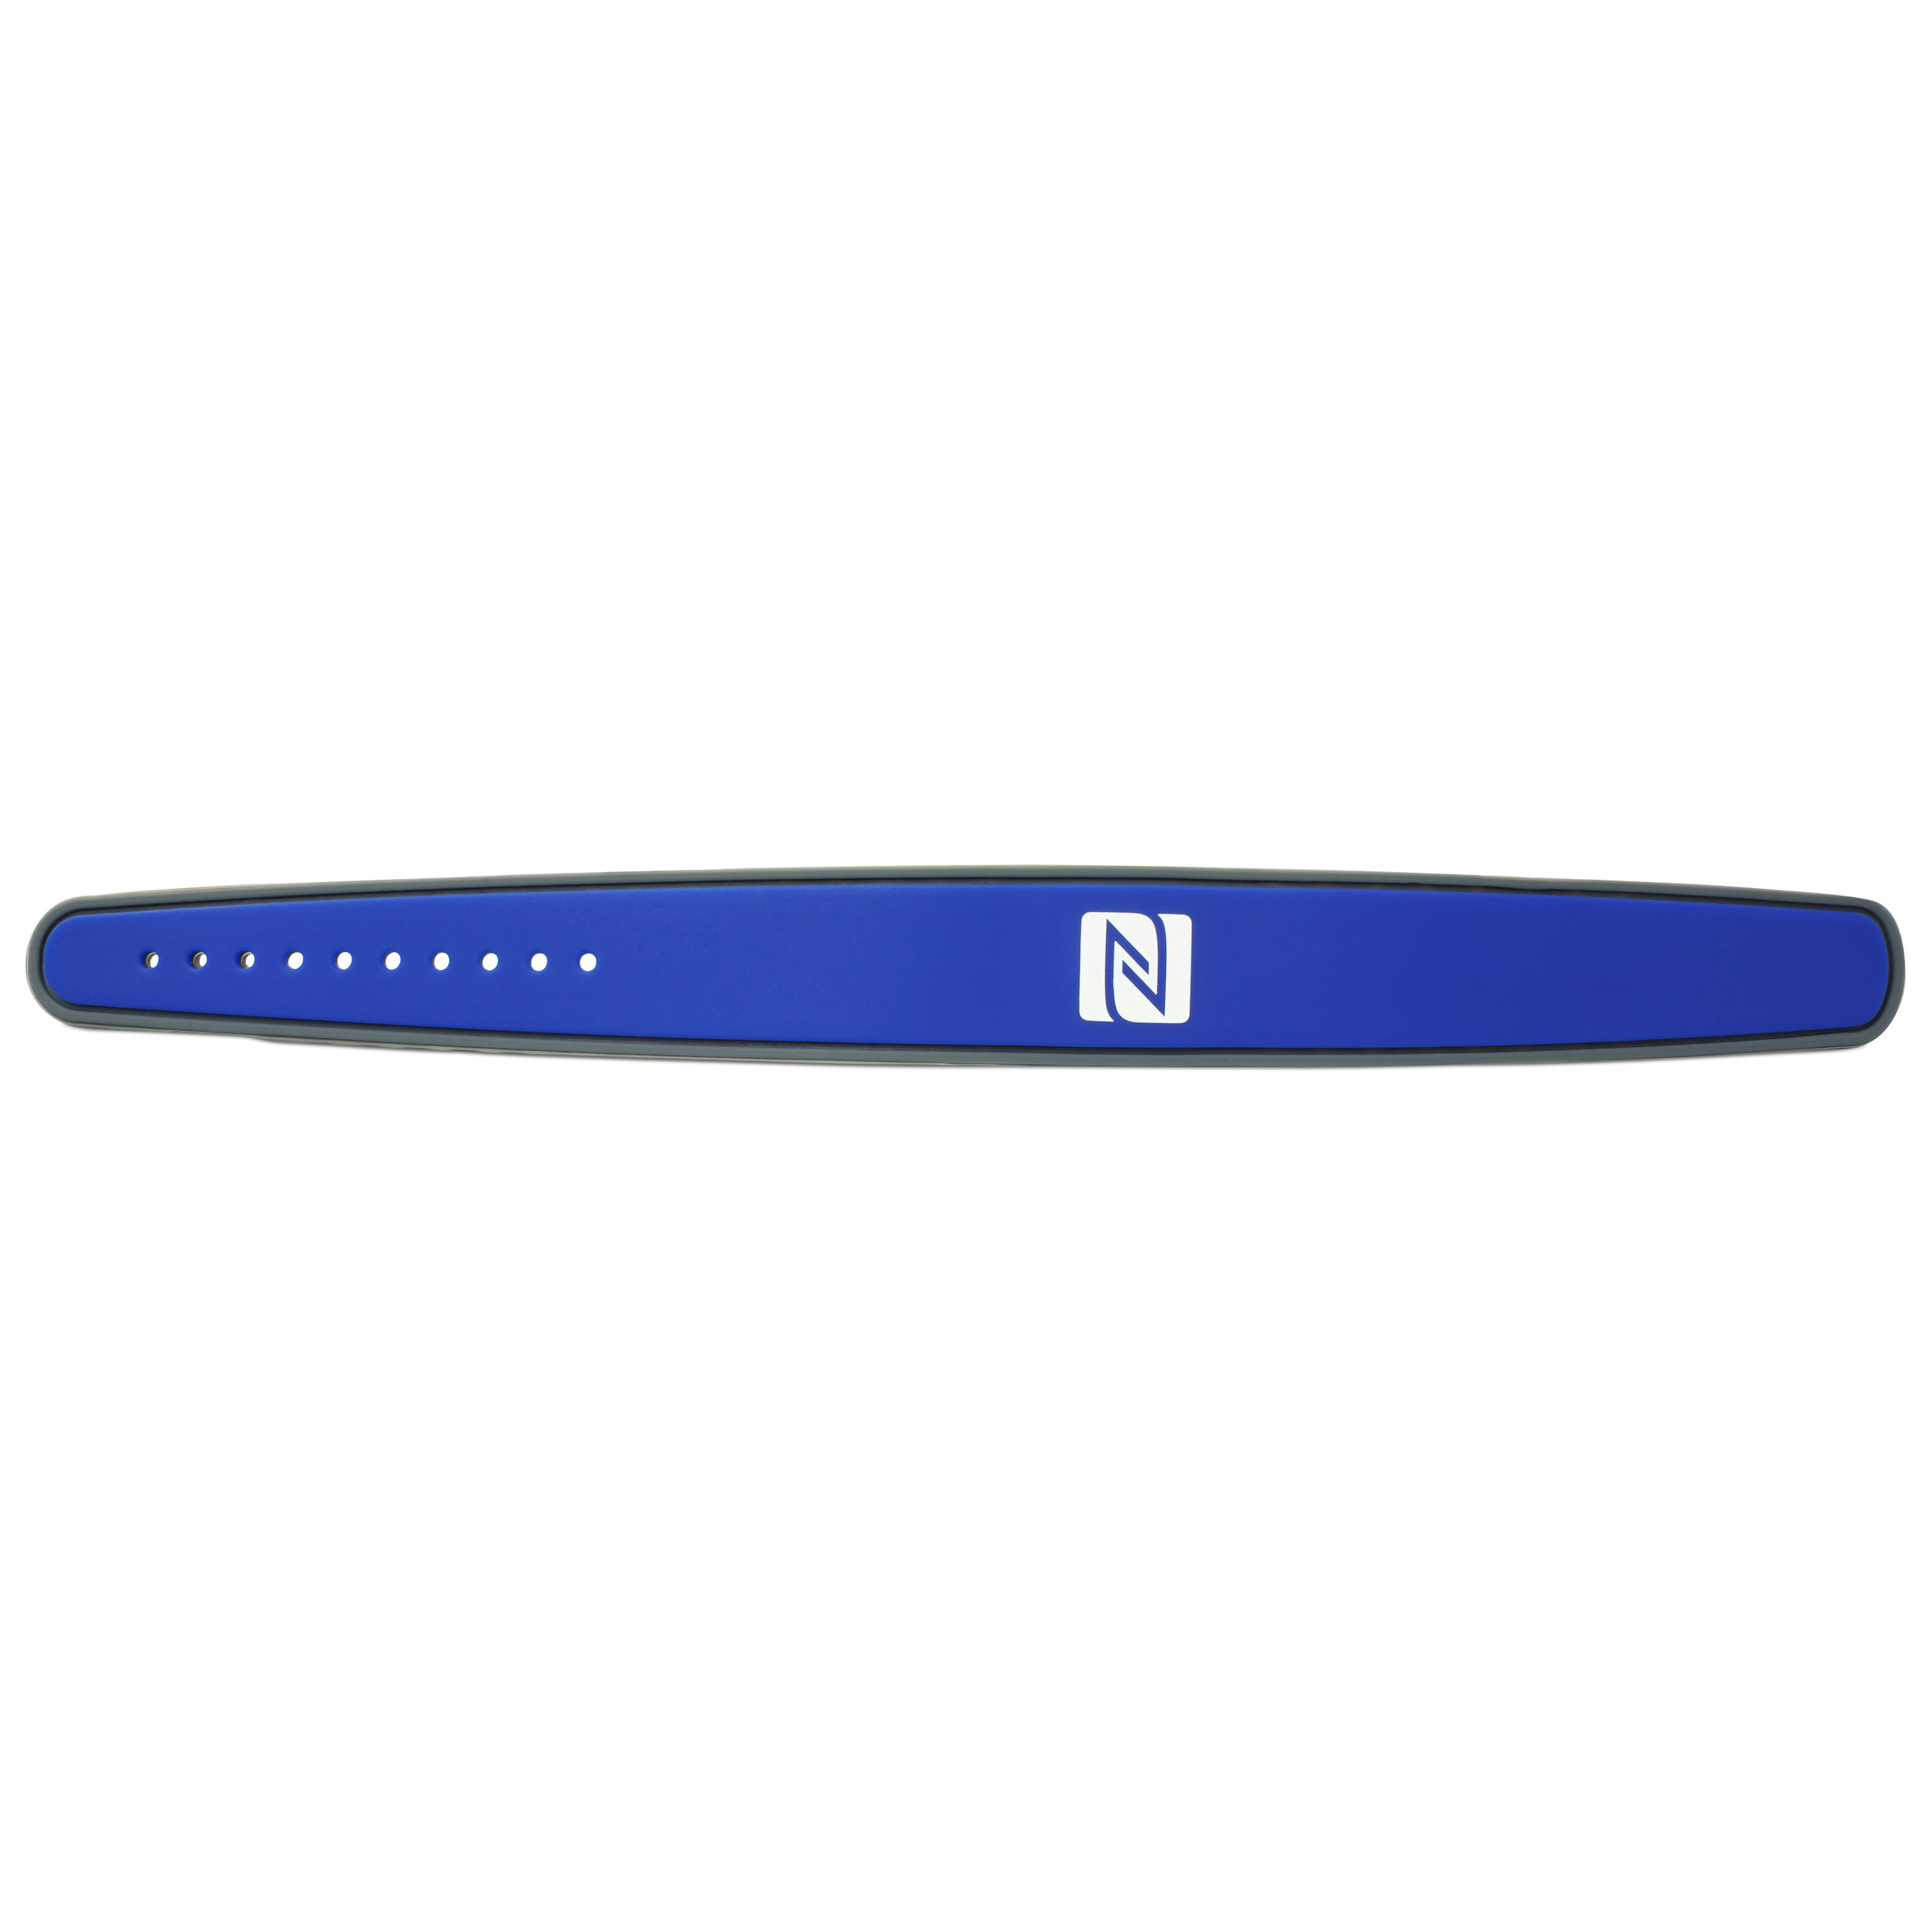 NFC bracelet silicone - 260 x 27 x 5 mm - NTAG216 - 924 byte - blue